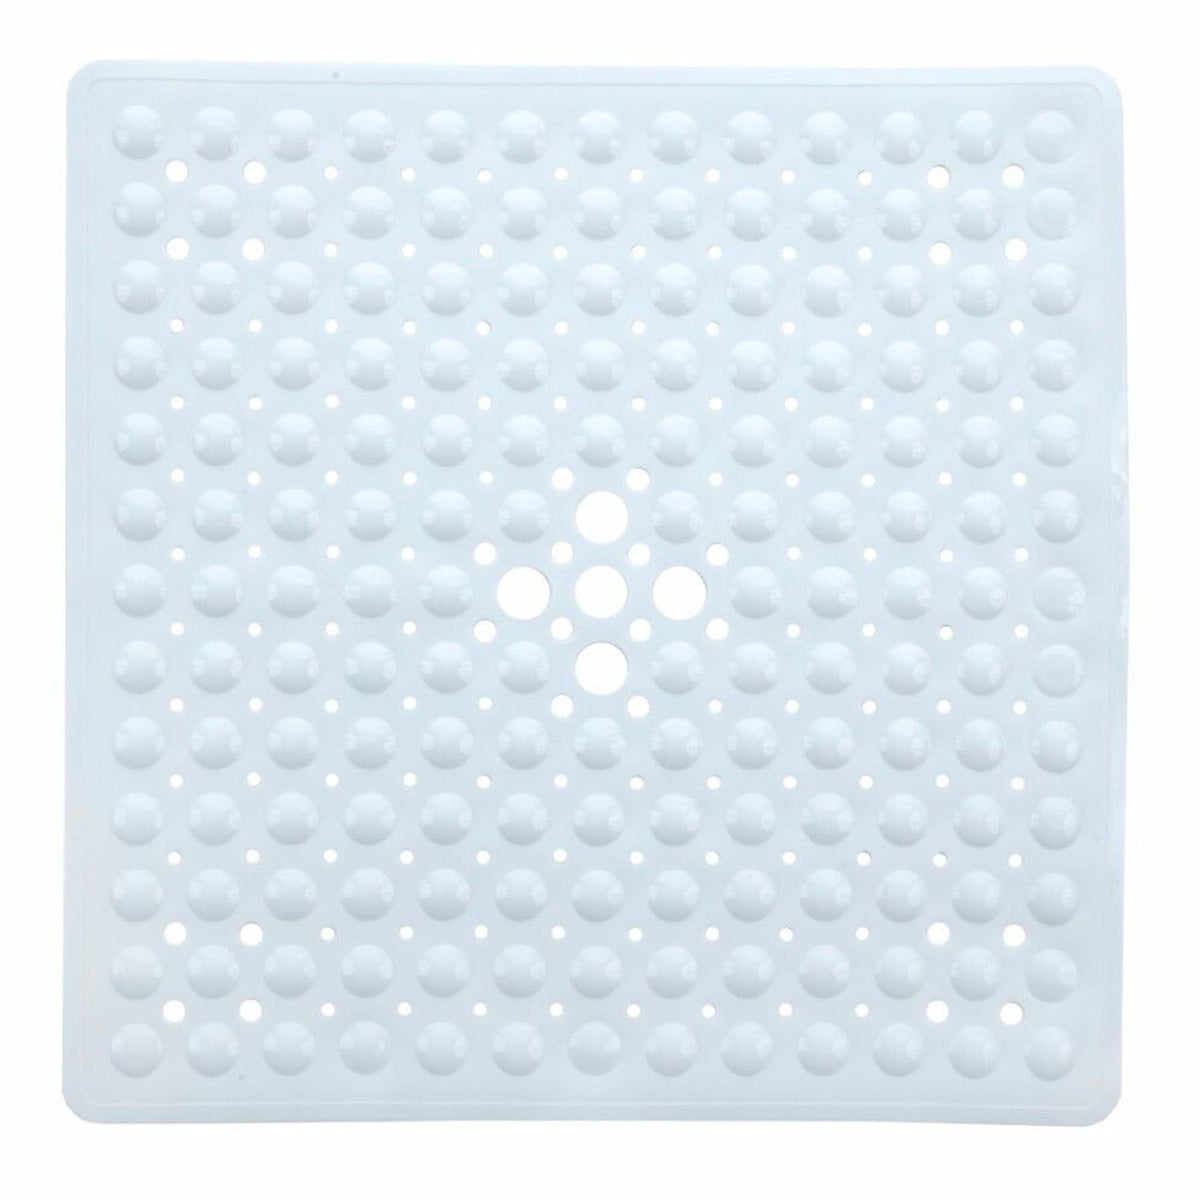 Square Shower Mat, White Color